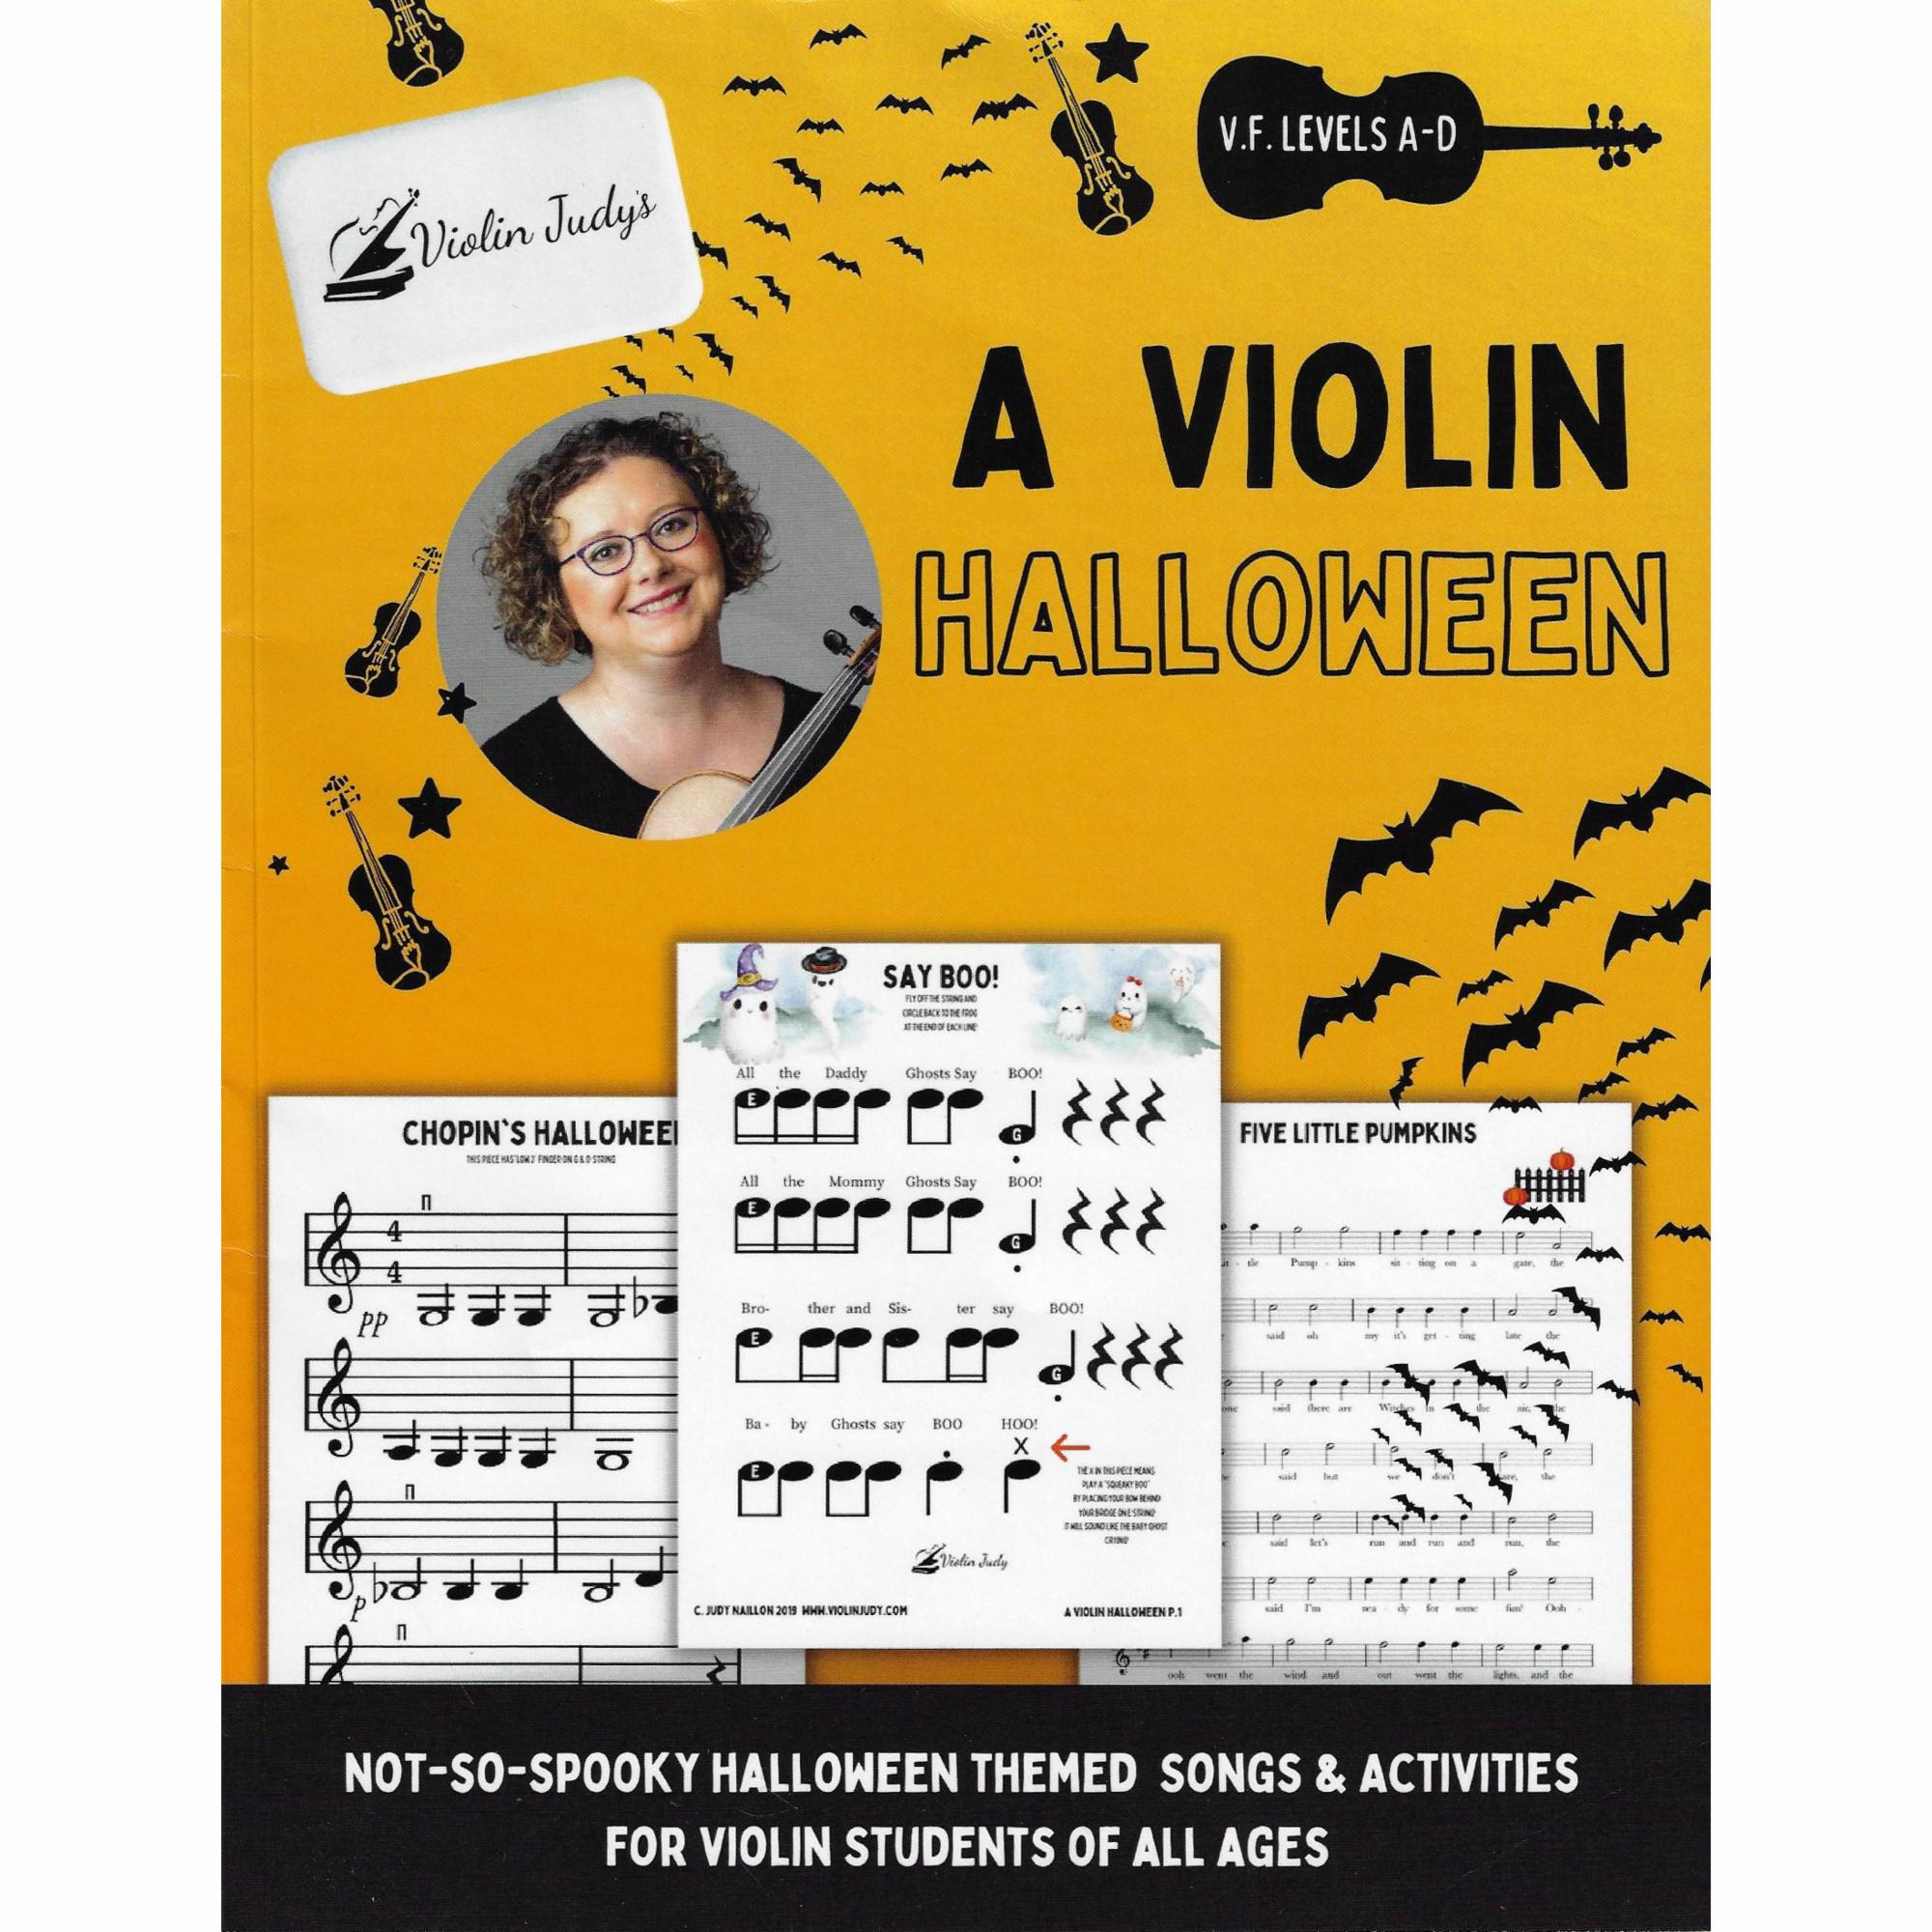 Violin Judy's A Violin Halloween